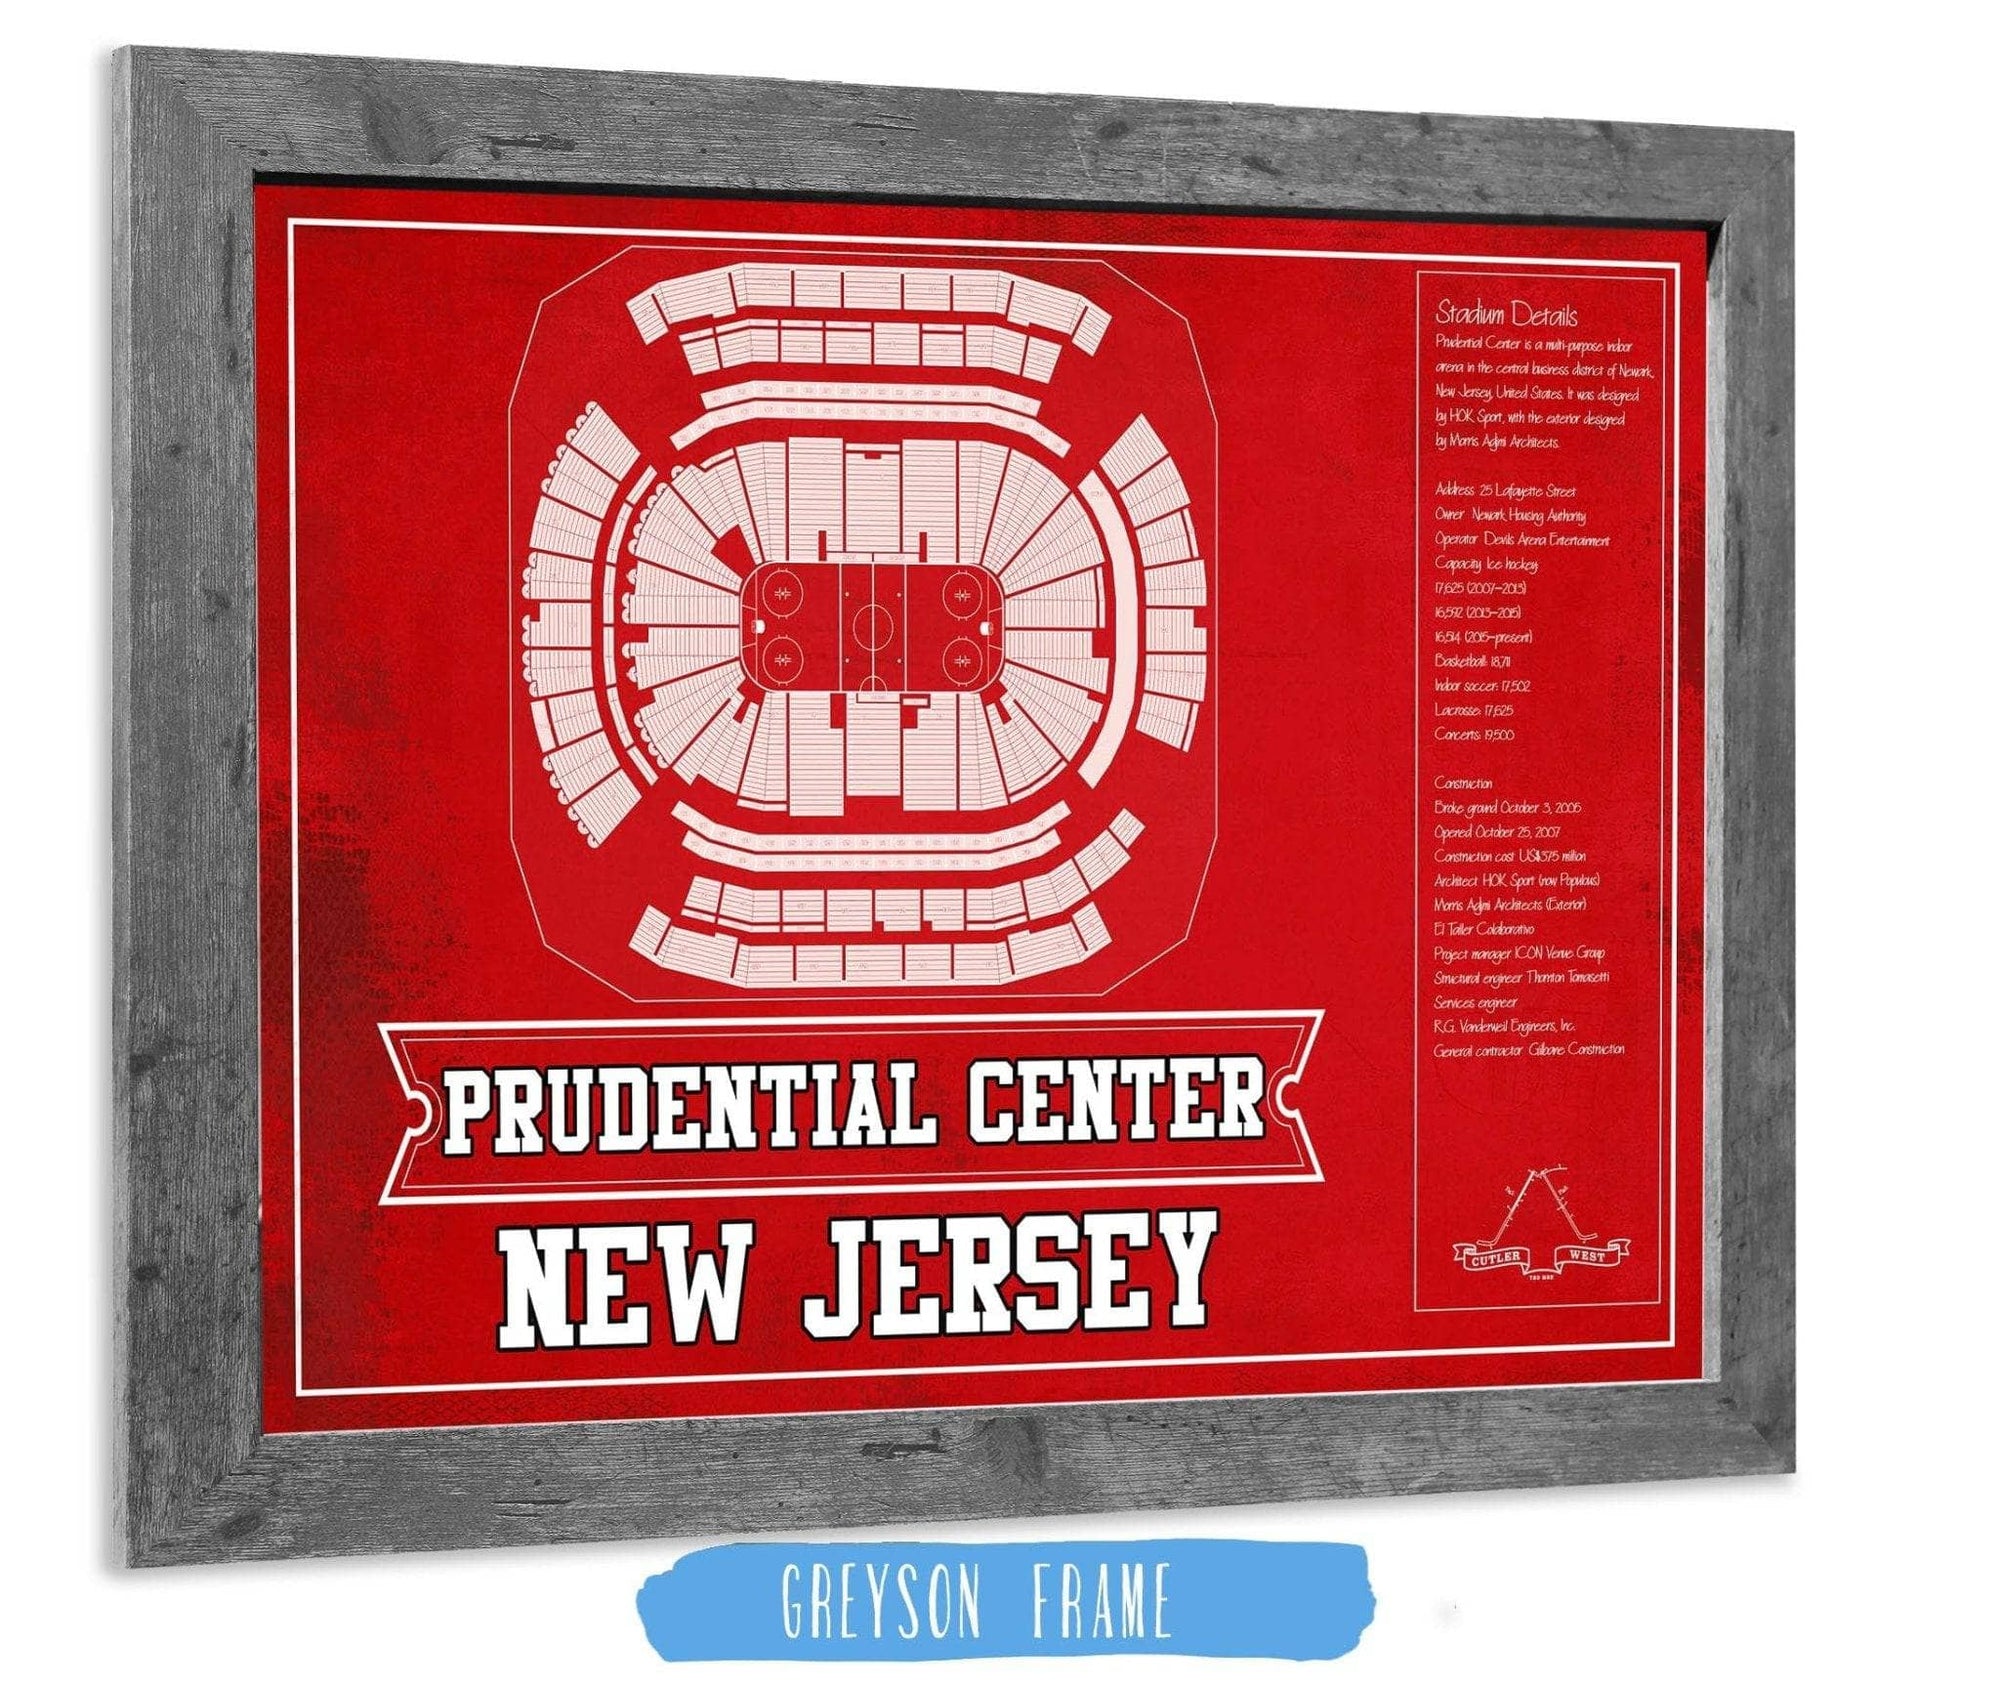 Cutler West 14" x 11" / Greyson Frame New Jersey Devils Team Colors Prudential Center Vintage Hockey Print 933350200_80331